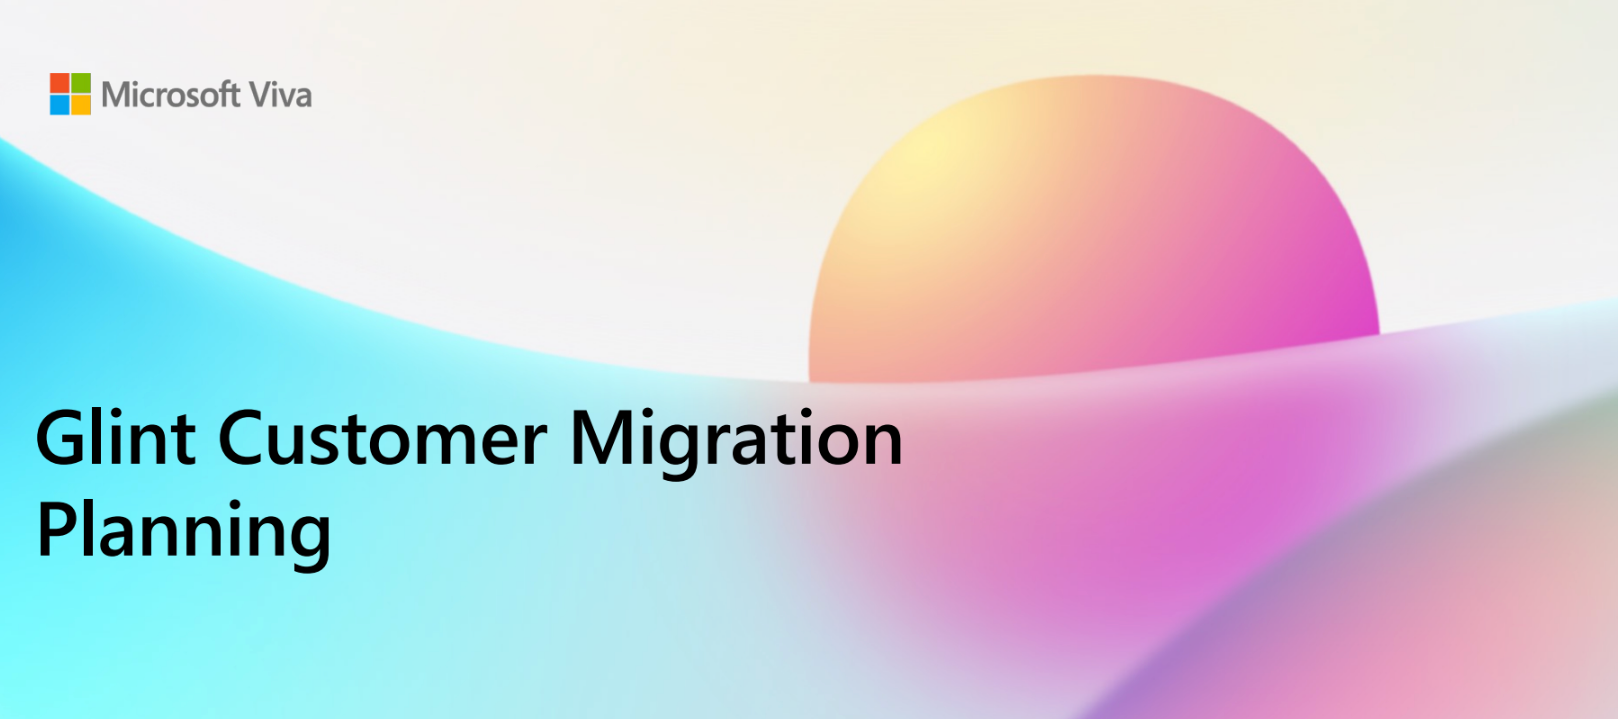 Glint Customer Migration Webinar